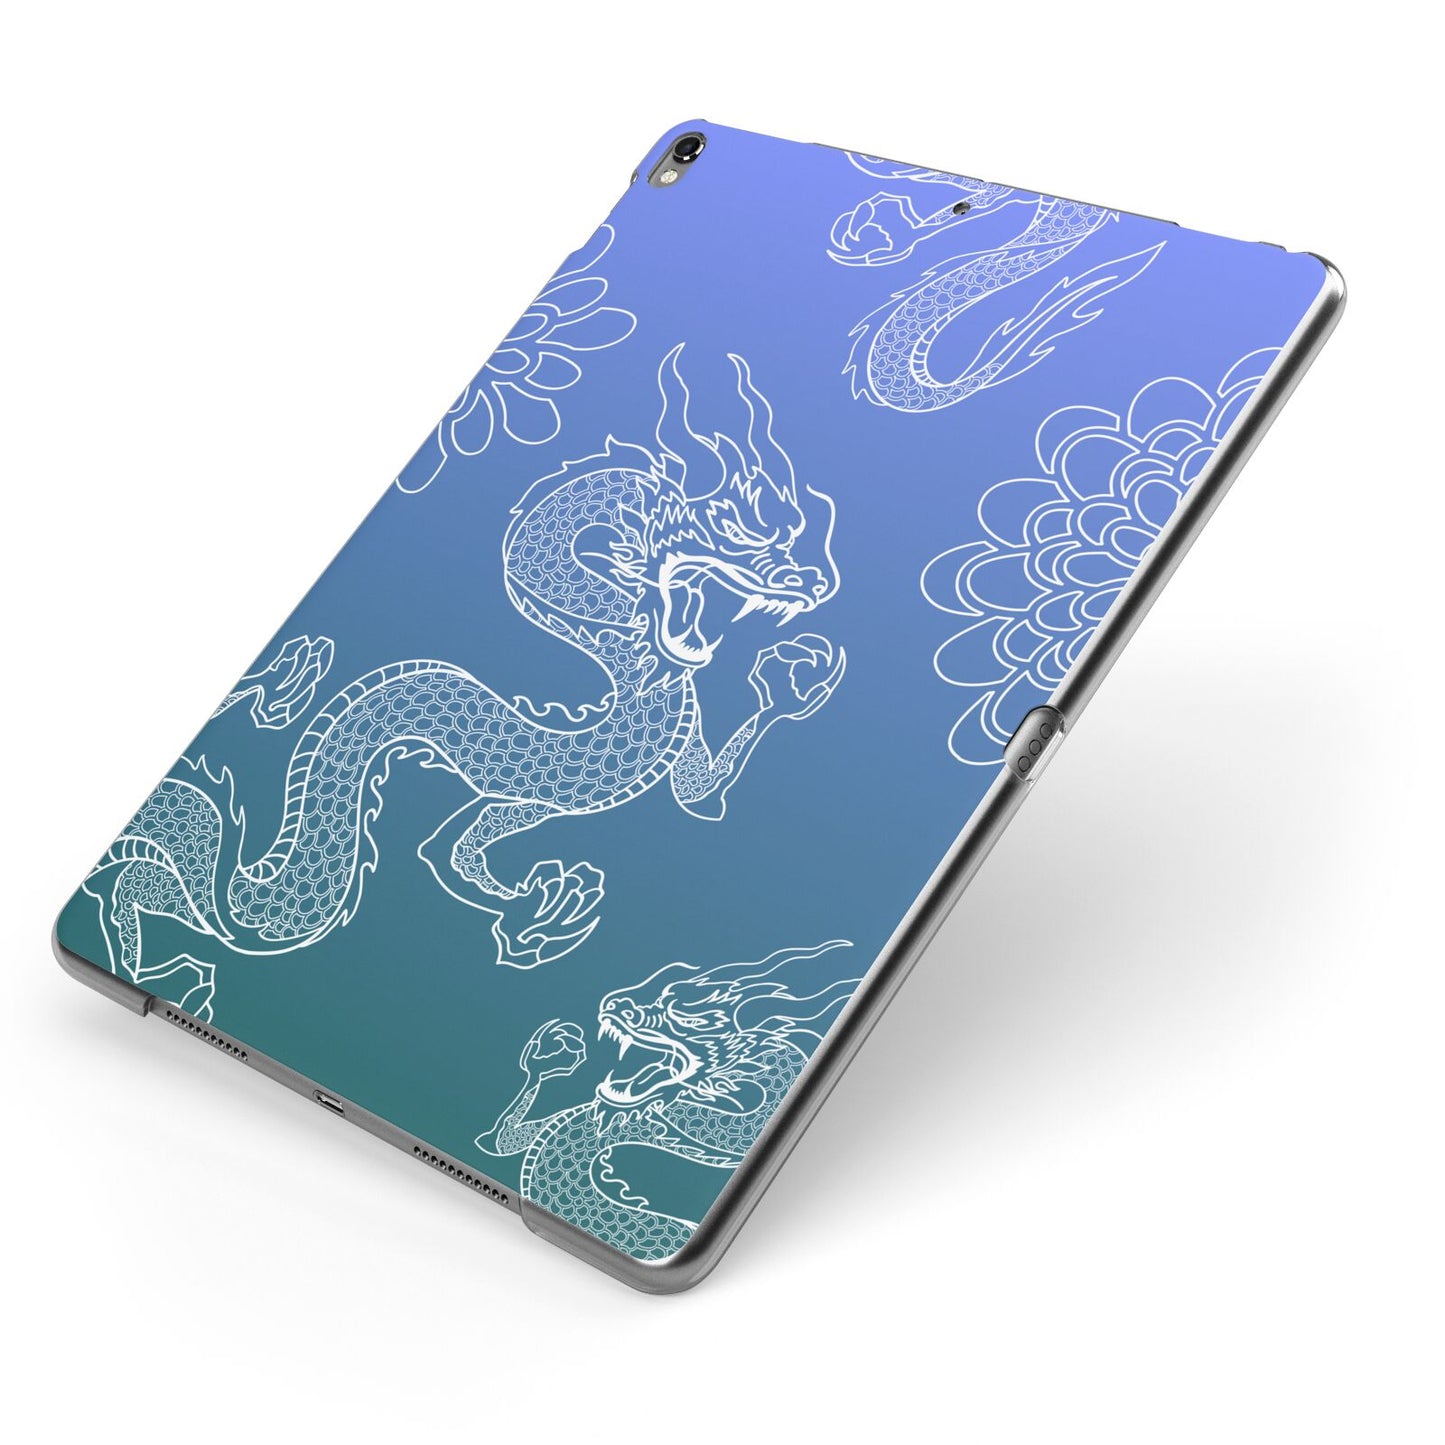 Dragons Apple iPad Case on Grey iPad Side View